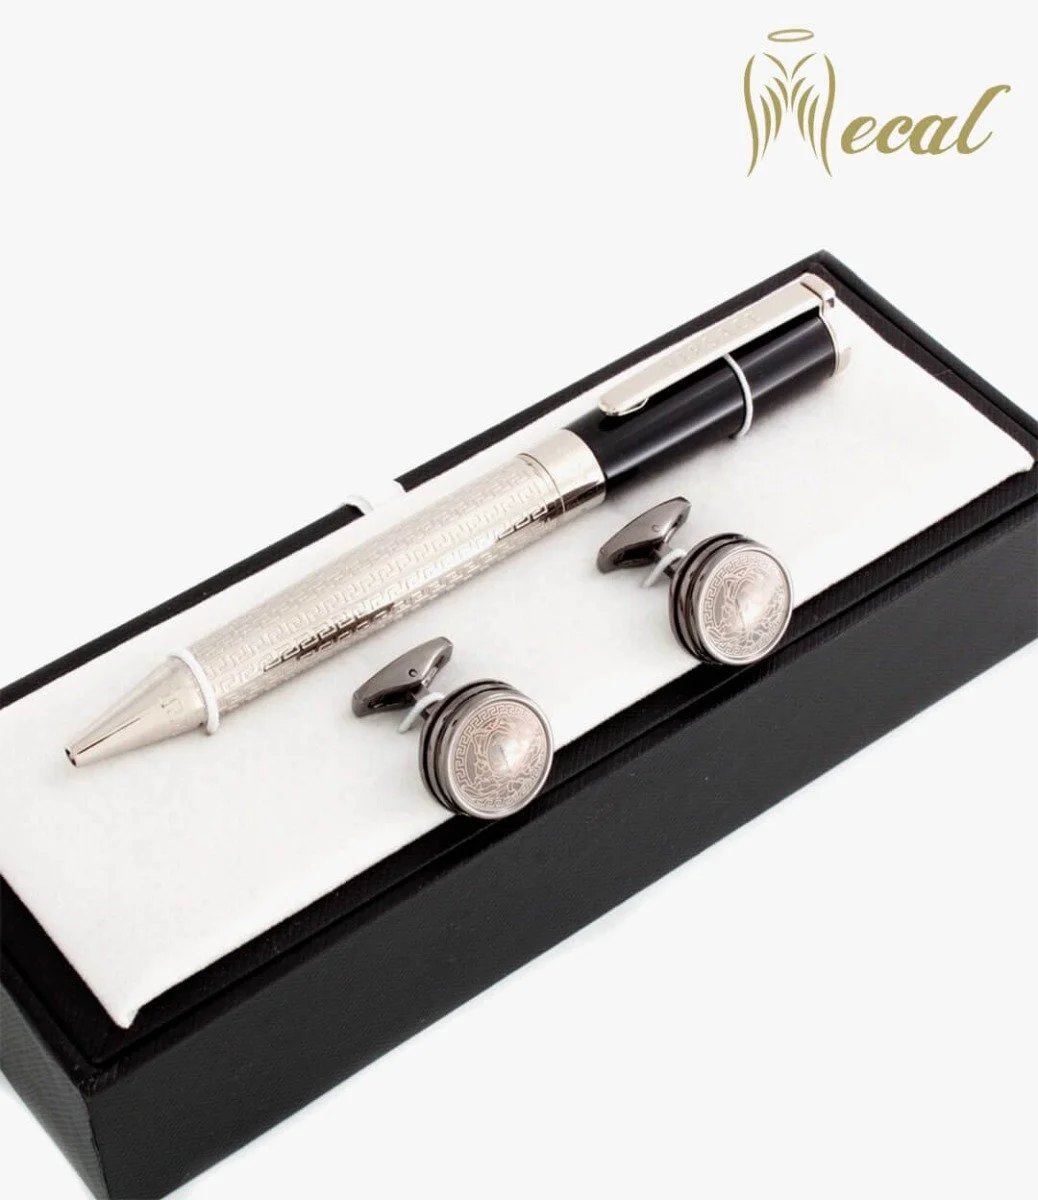 Silver & Black Pen & Cufflinks Gift Set by Mecal